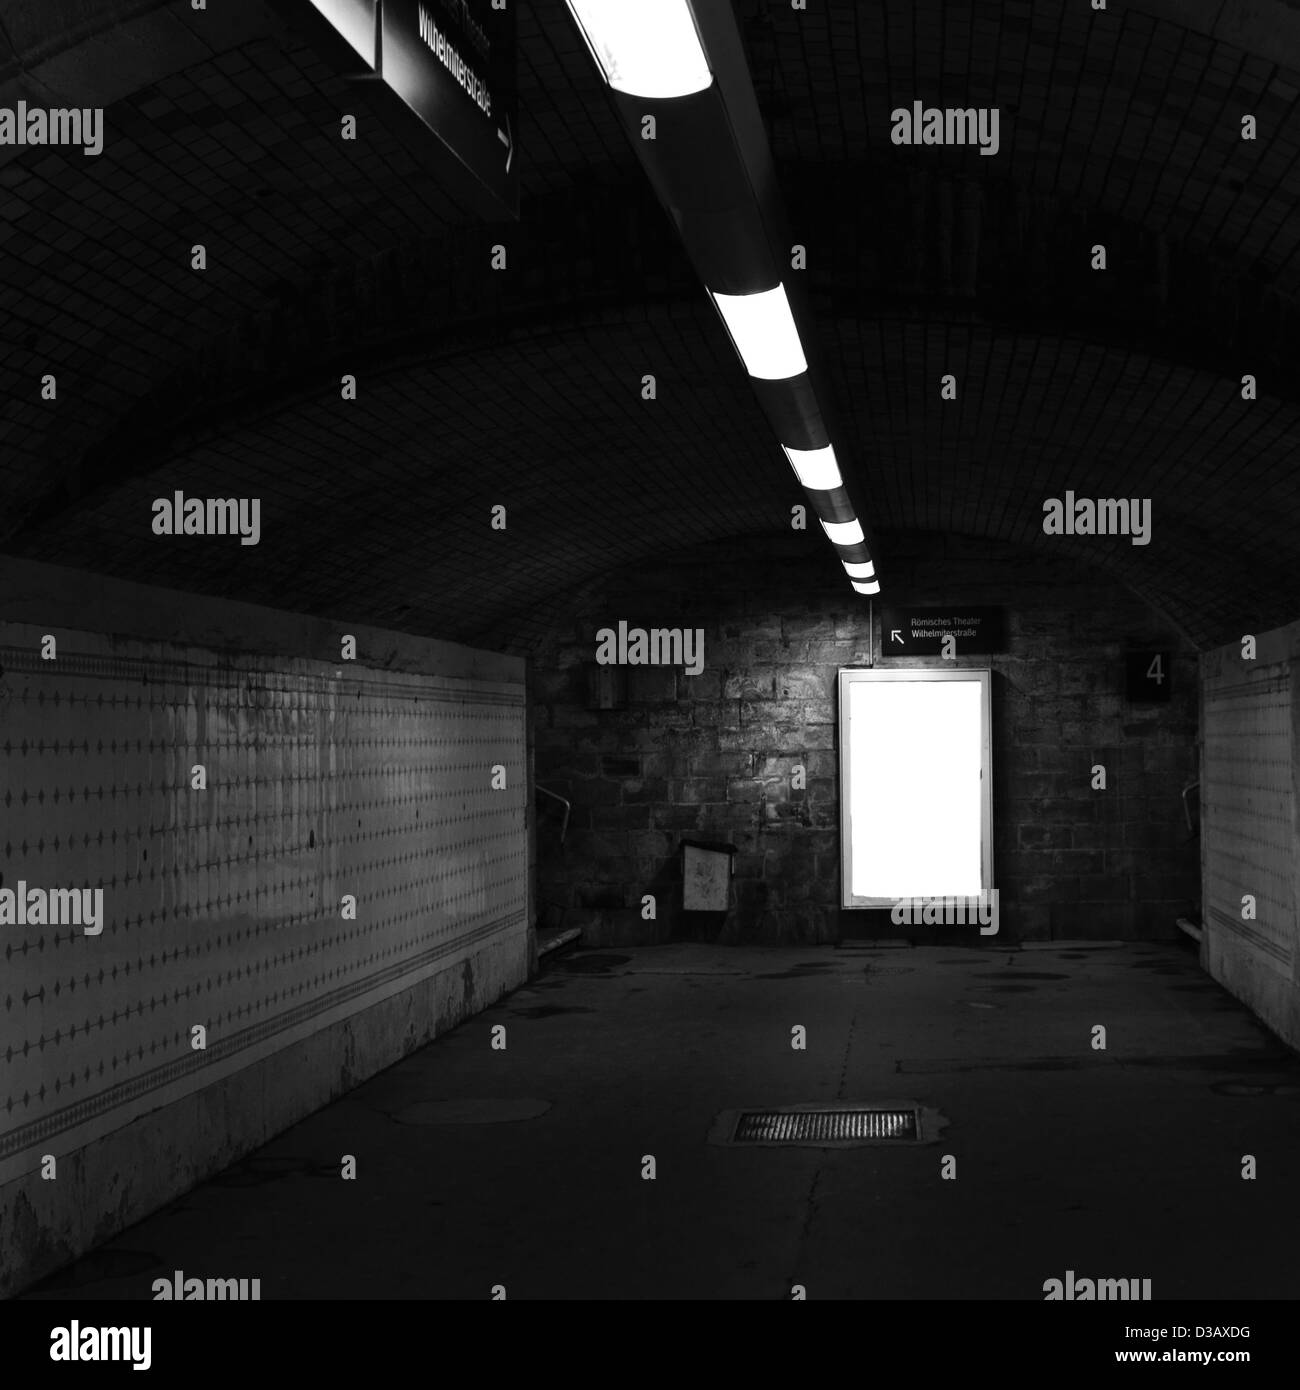 Railway station tunnel Stock Photo